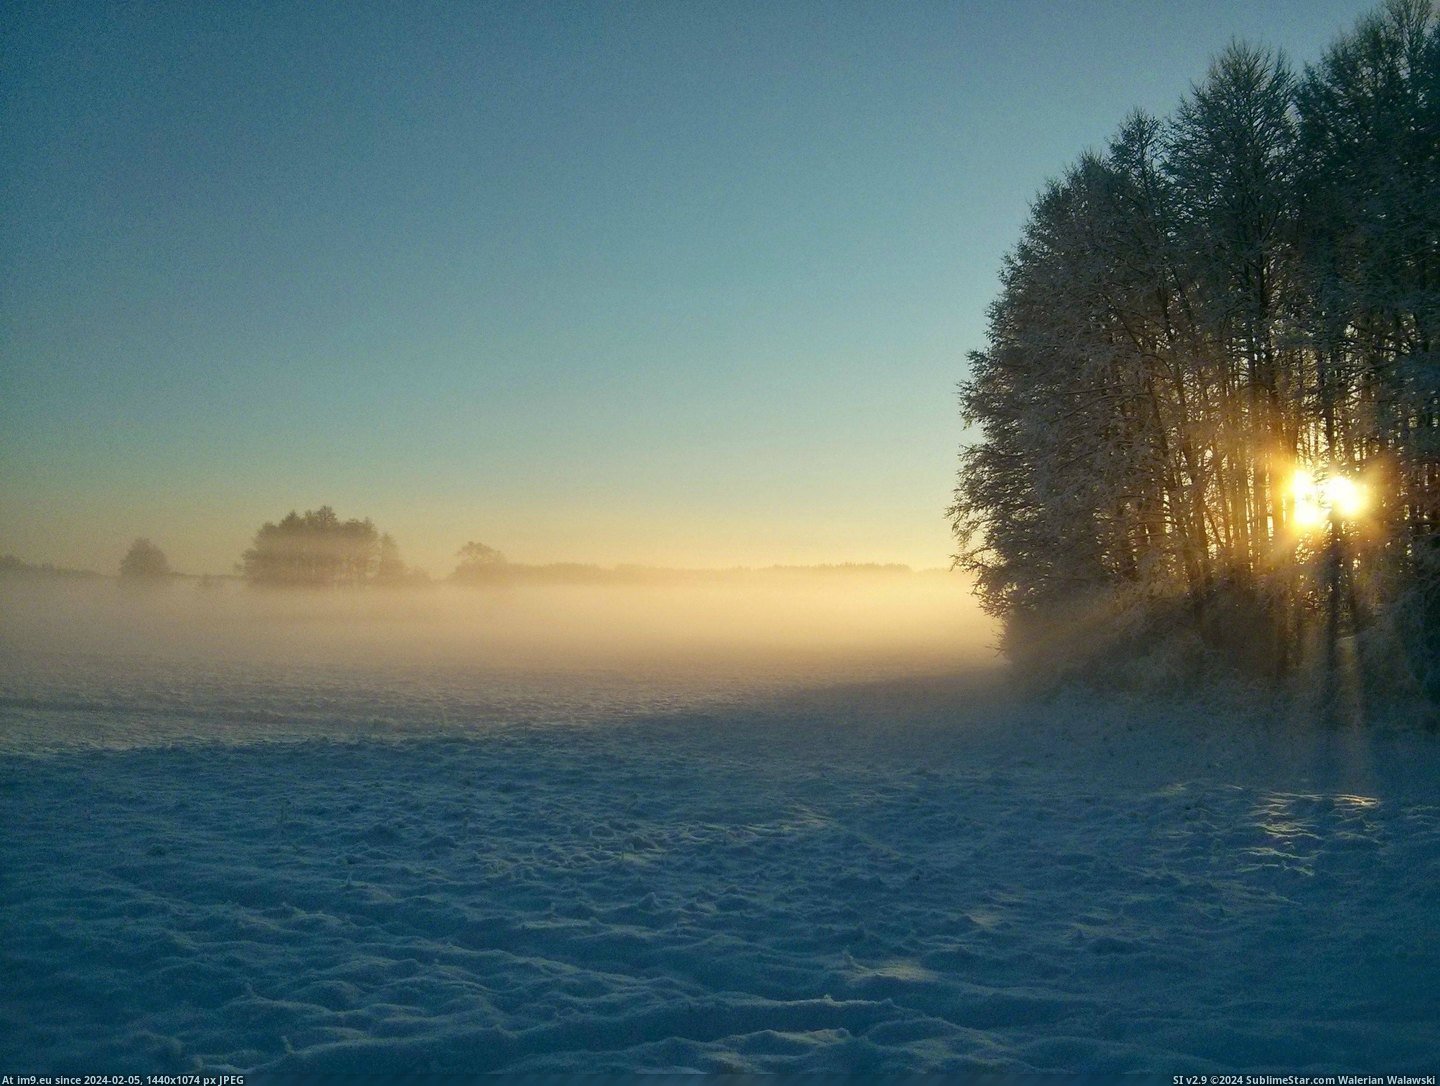 #Wallpaper #Beautiful #Wide #Misty #Pomerania #3264x2448 #Poland #Evening [Earthporn] Misty evening in Pomerania, Poland [OC][3264x2448] Pic. (Изображение из альбом My r/EARTHPORN favs))